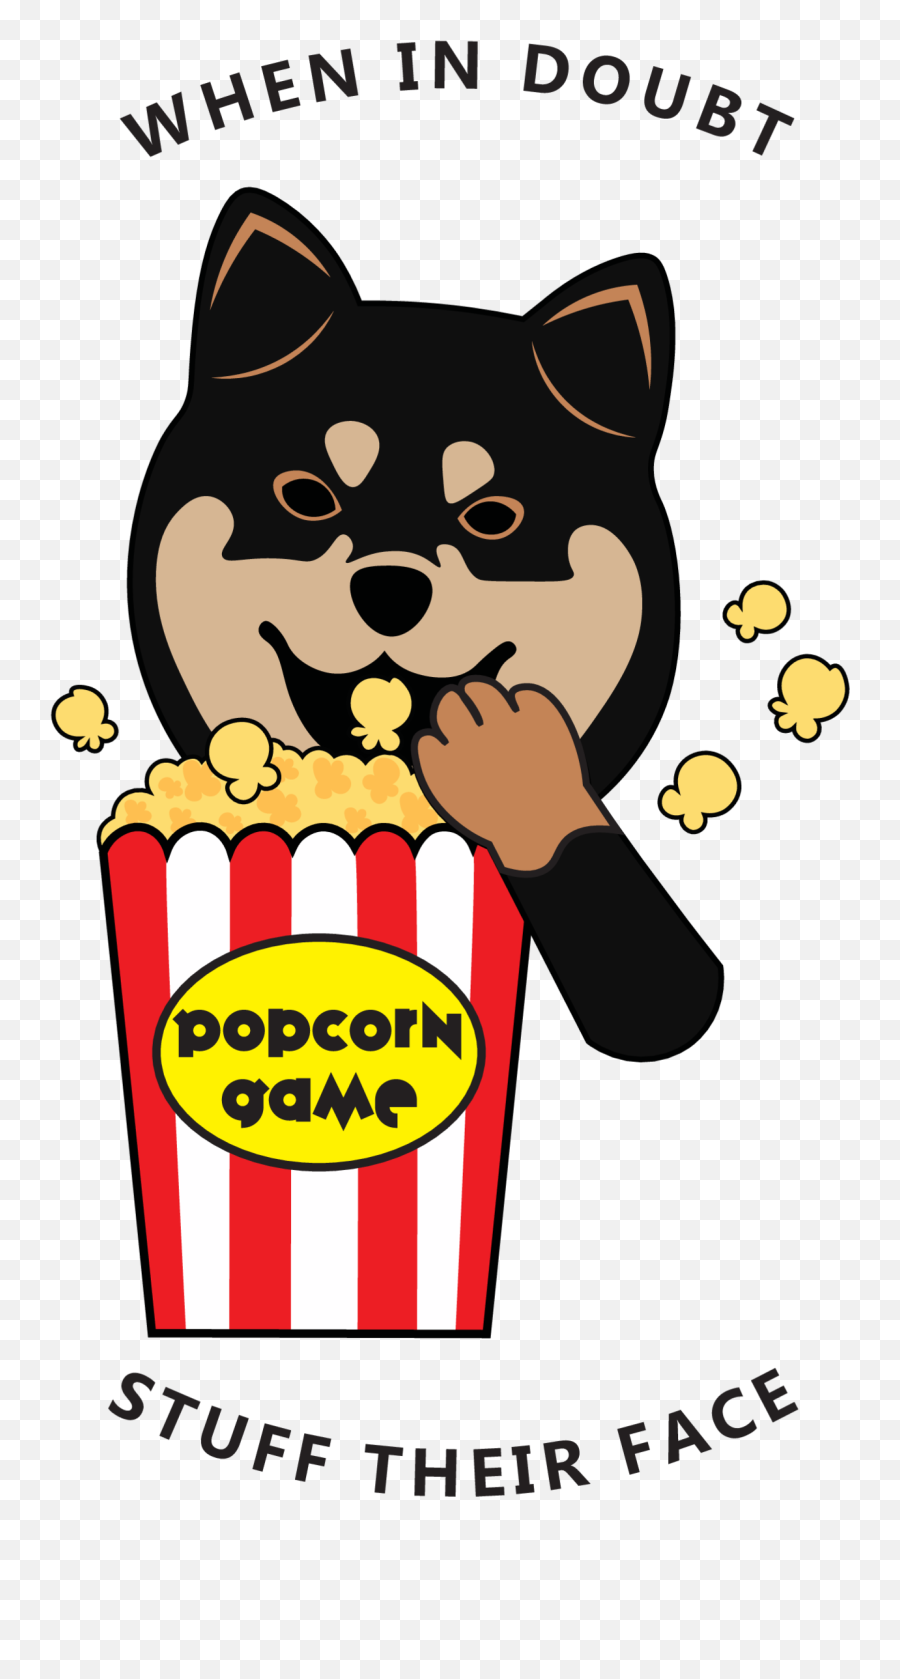 When In Doubtu2026 Stuff Their Face - The Popcorn Game U2014 Couch Emoji,Caucasian Shepherd Puppy Emoticon Face